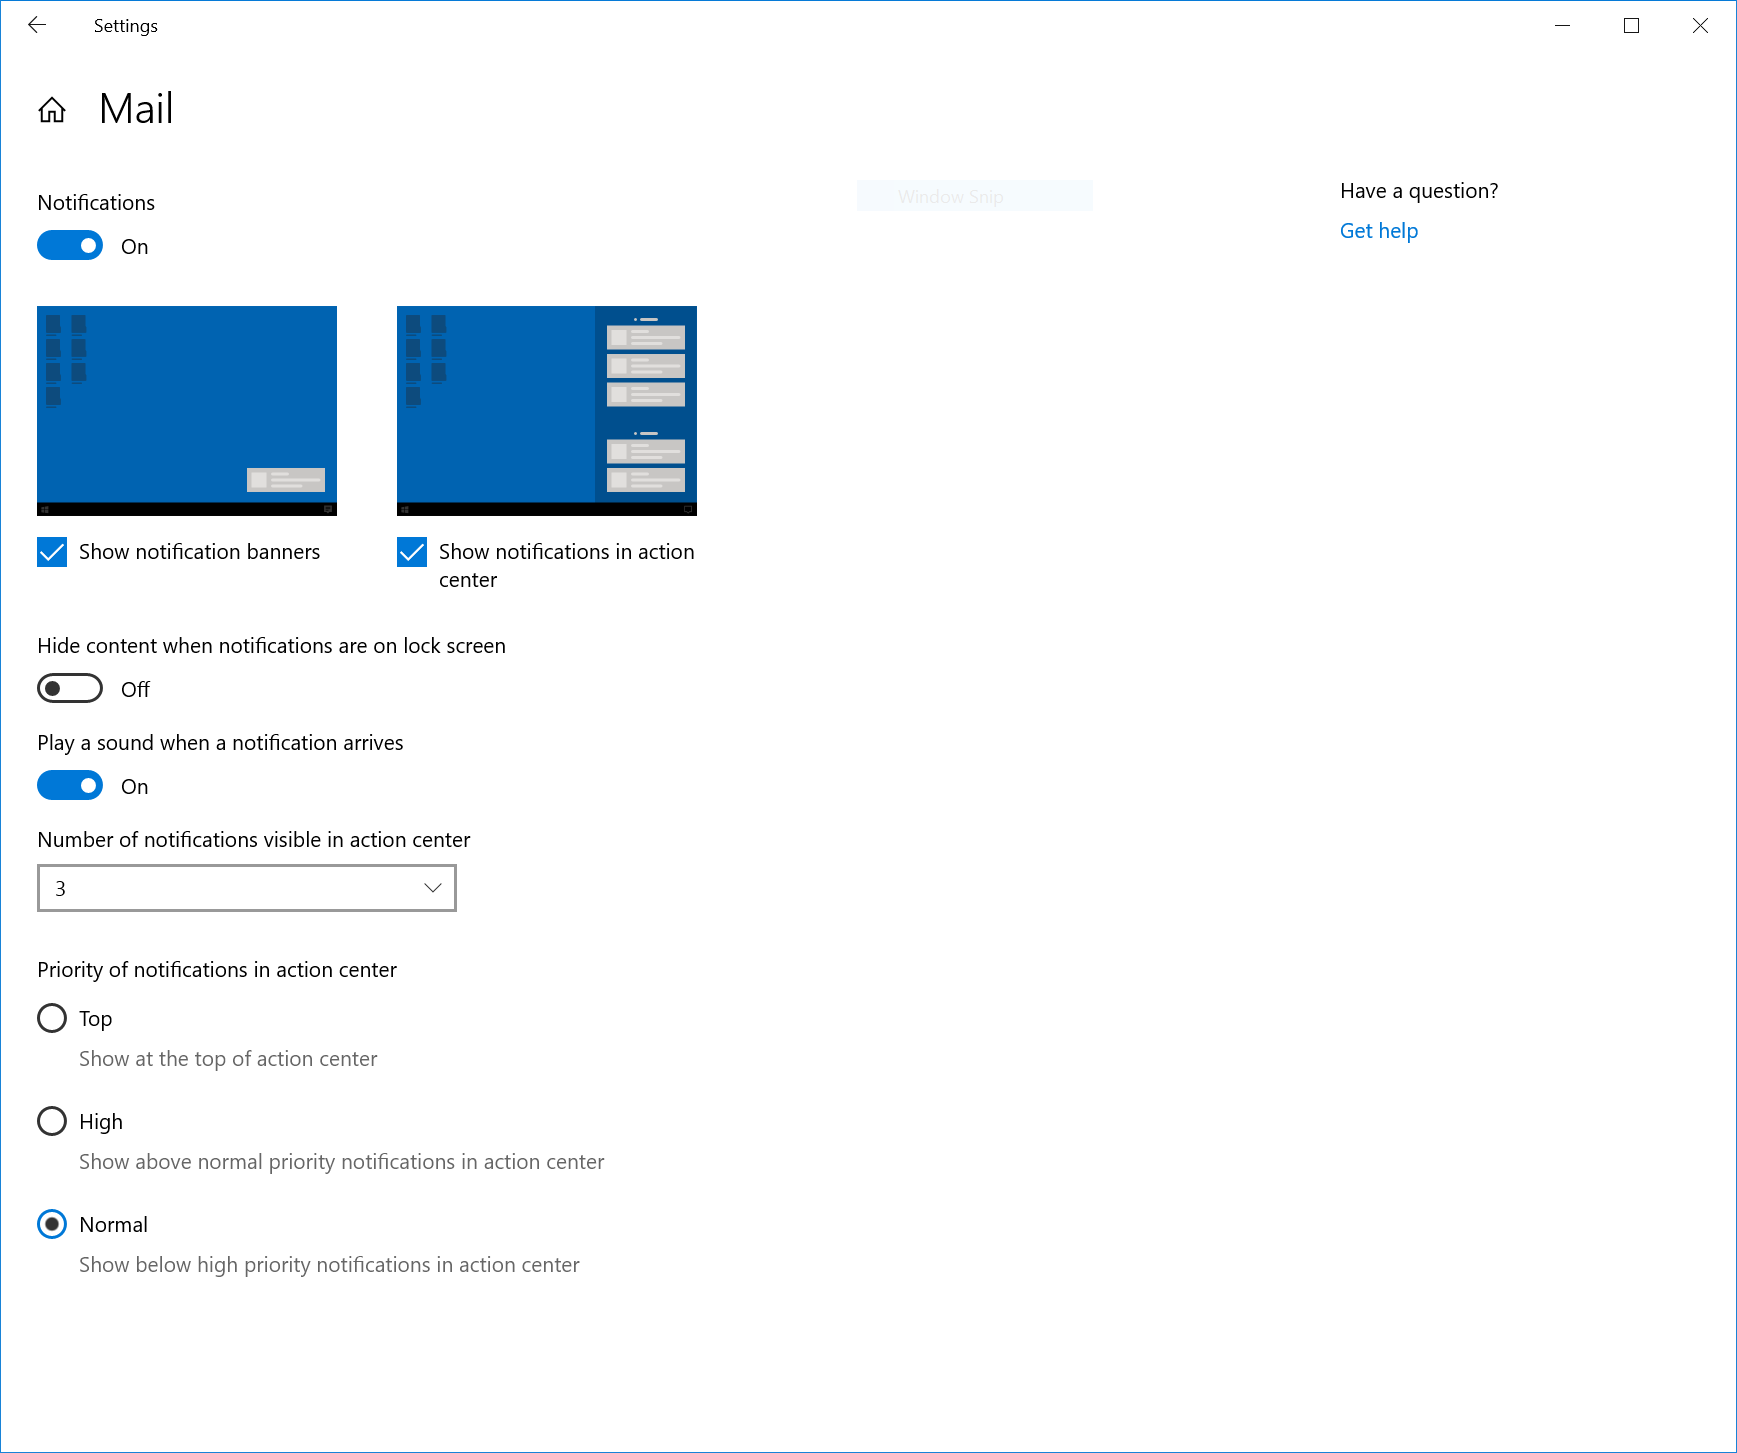 Microsoft releases new cumulative updates for windows 10 19h2 527004 2